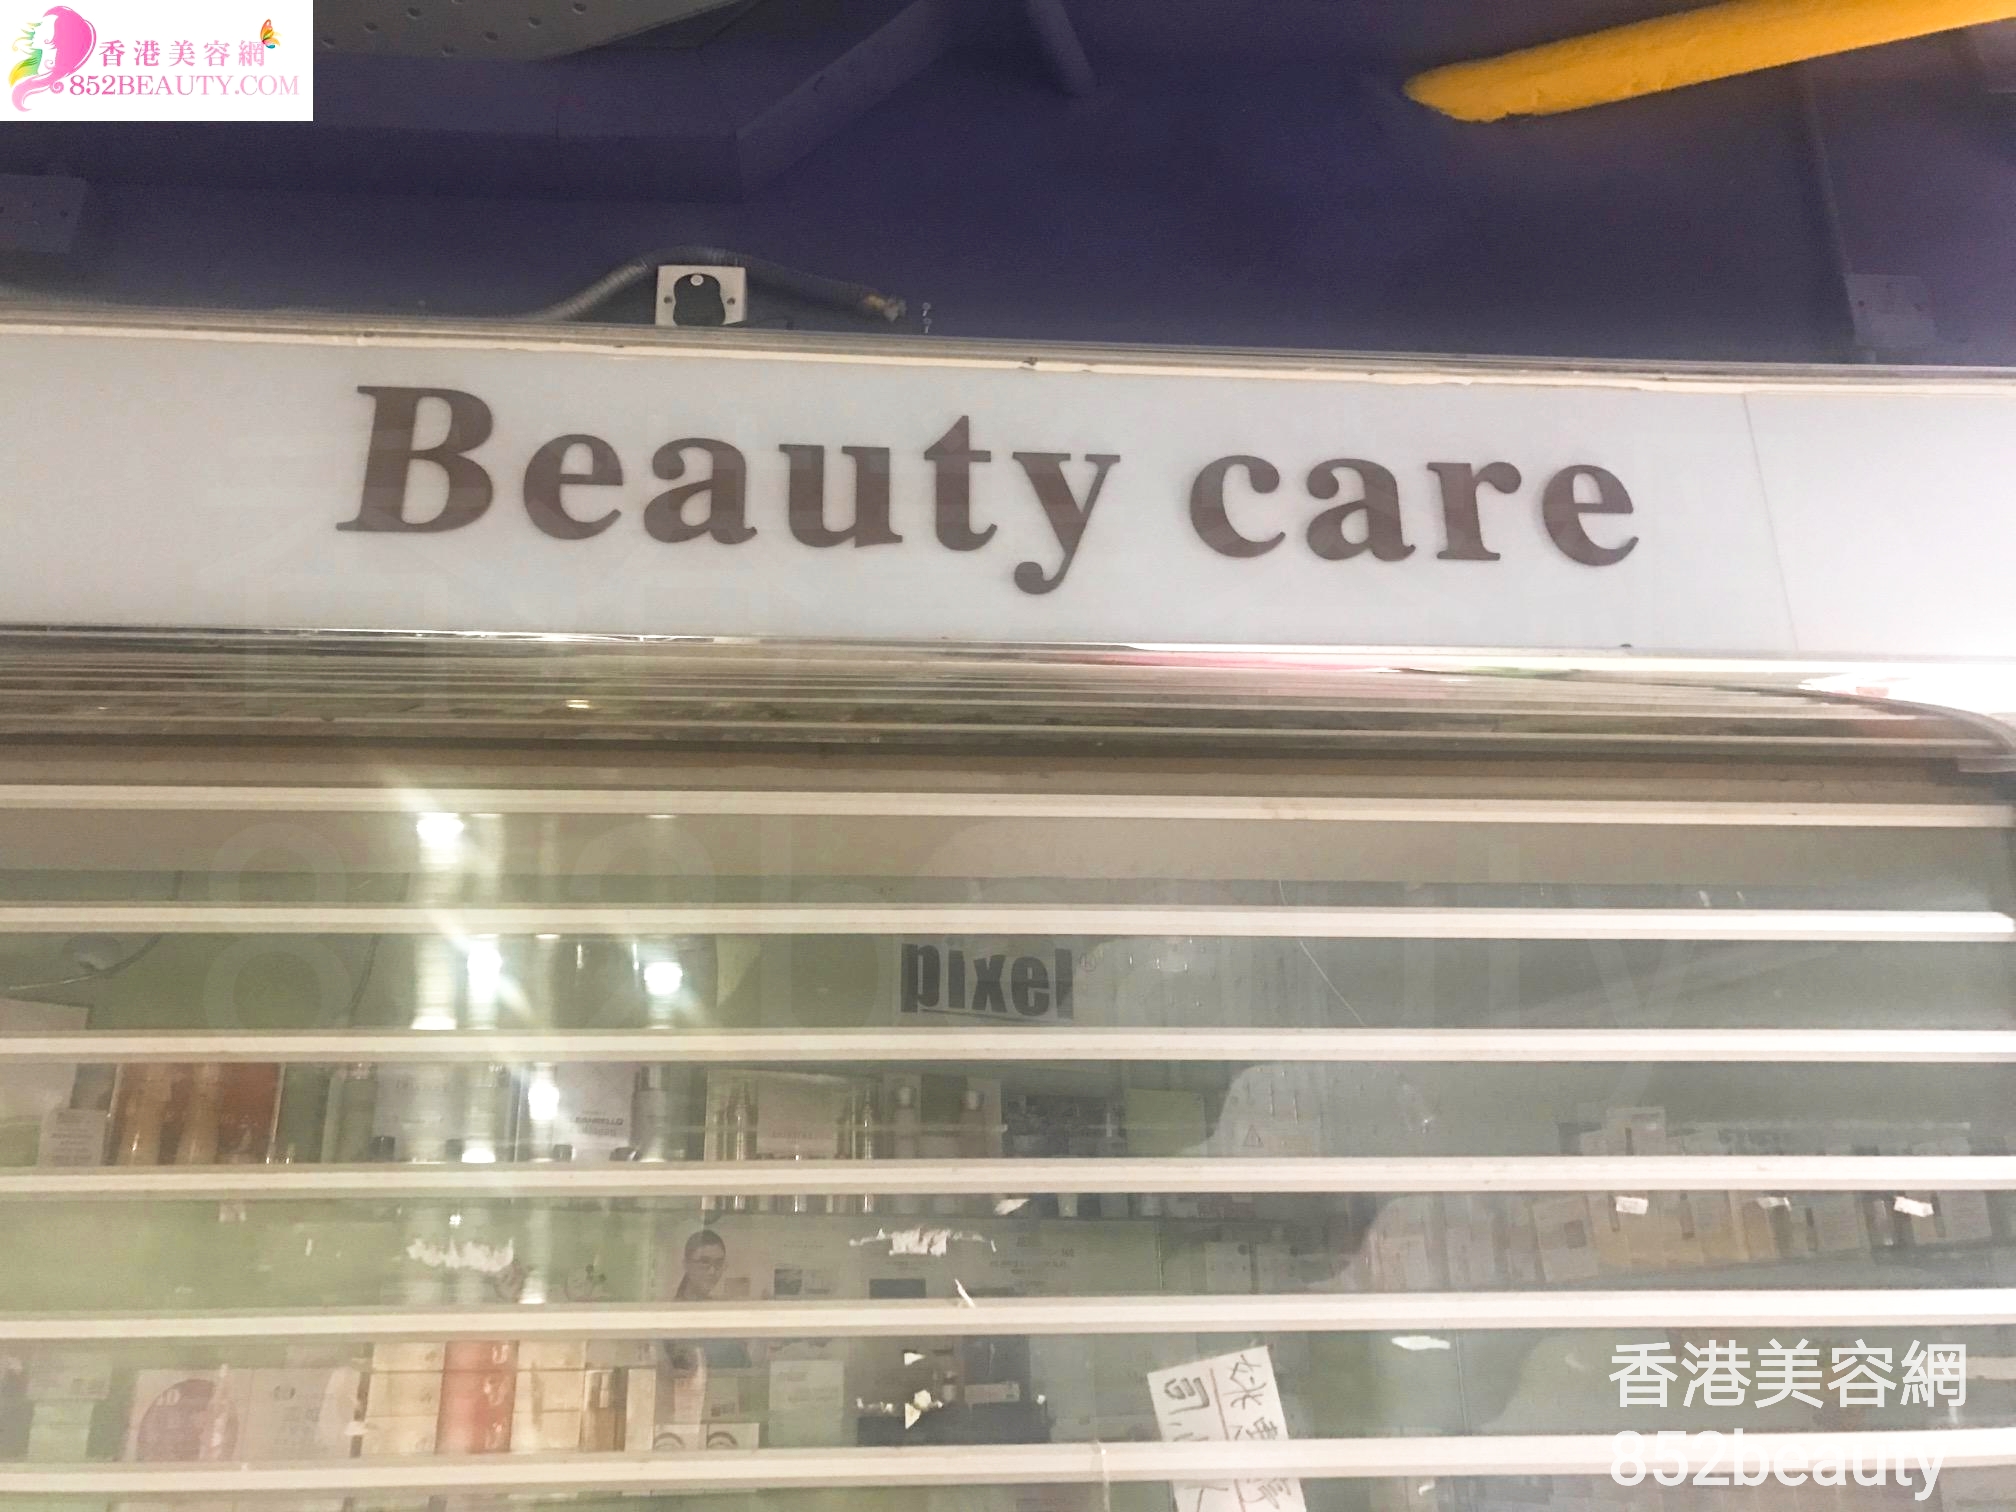 Facial Care: Beauty care